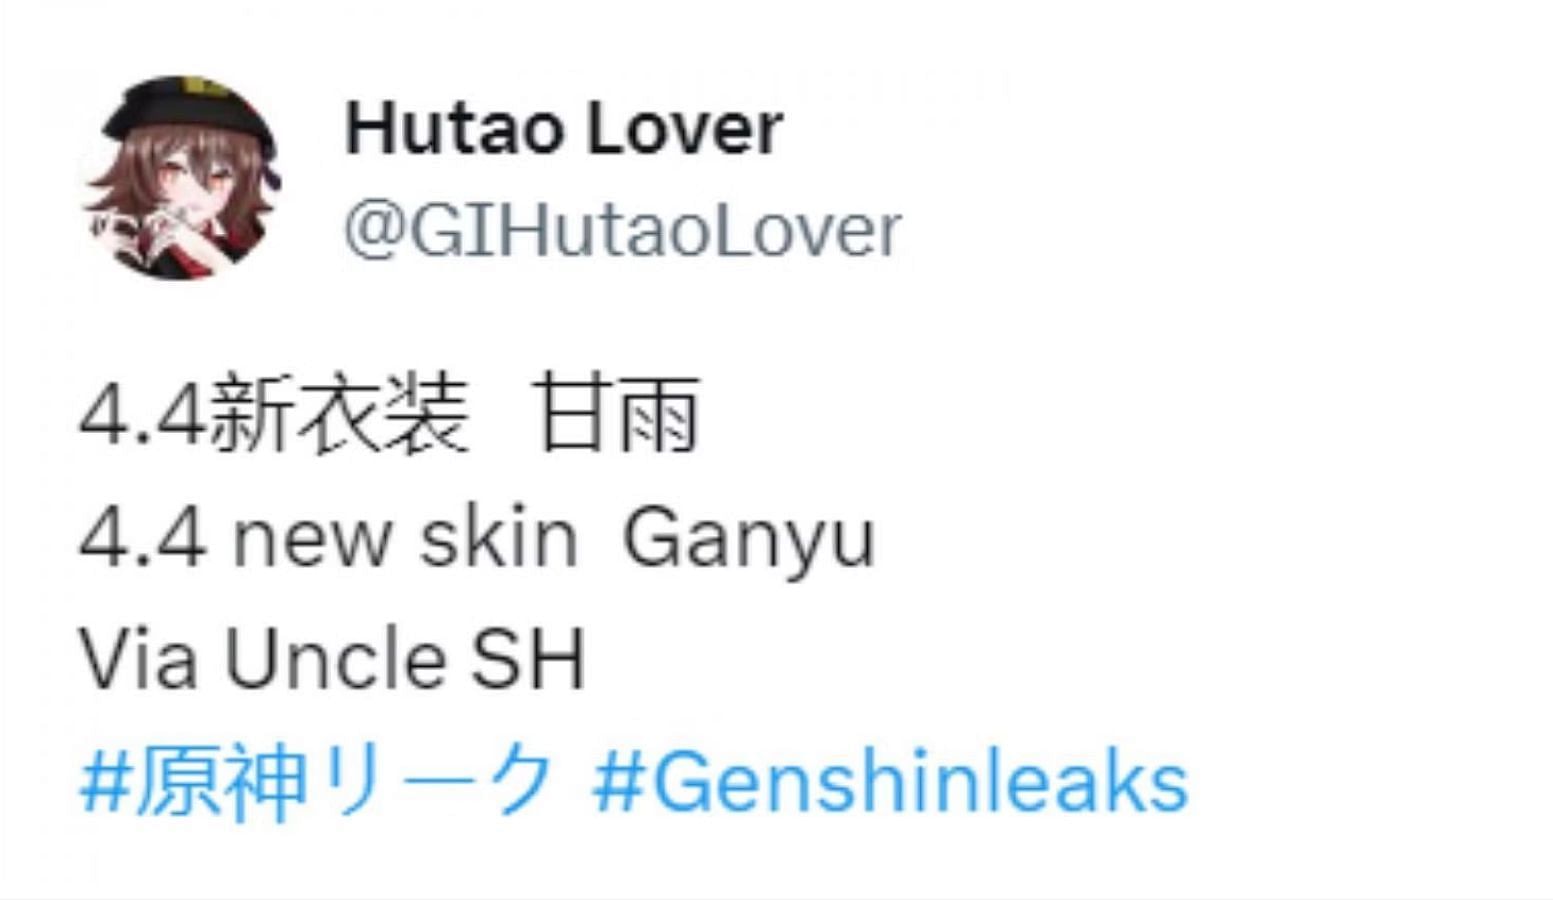 Ganyu skin version 4.4. (Image via Twitter/GIHutaoLover)